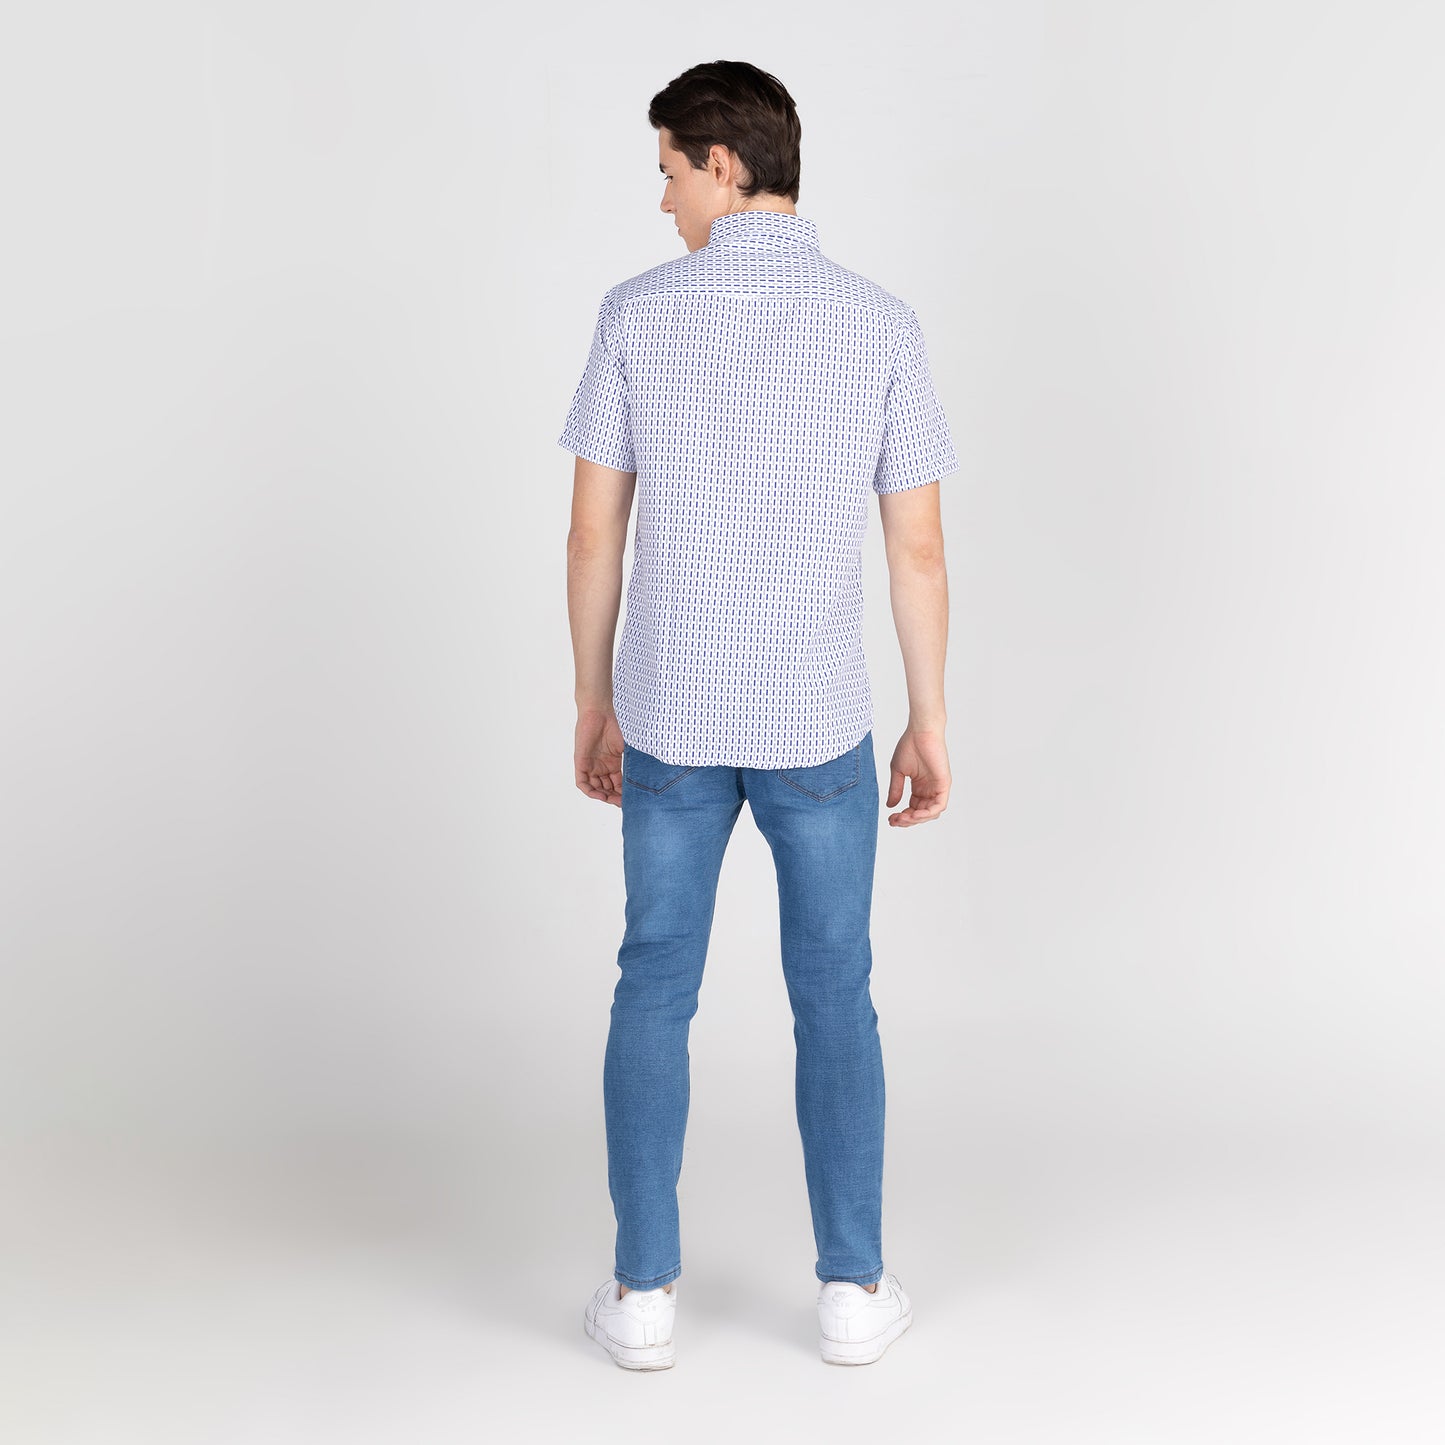 K1568 Mens REGULAR FIT Heritage Prints Button Down Short Sleeve Shirt - IDENTITY Apparel Shop